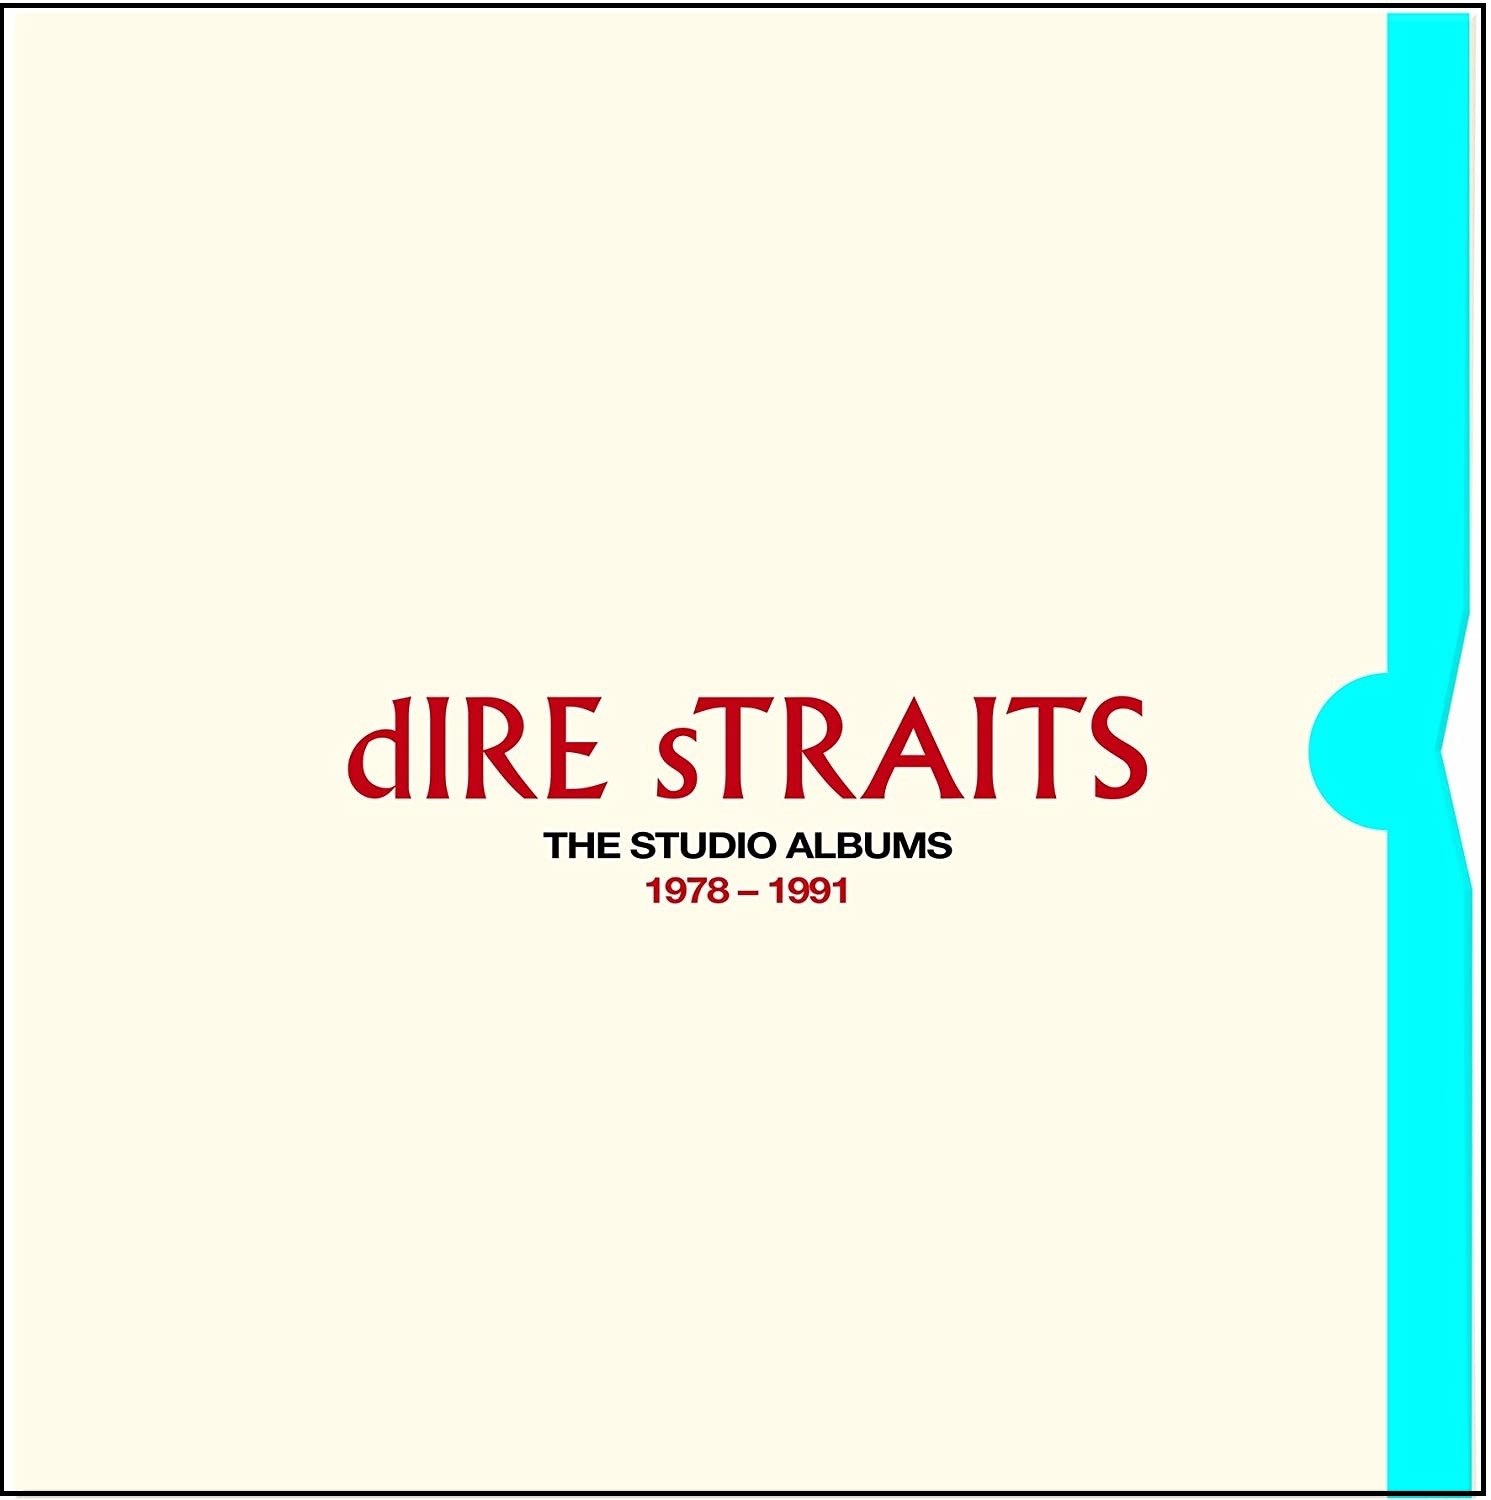 фото Аудио диск dire straits the studio albums 1978 – 1991 (6cd) мистерия звука